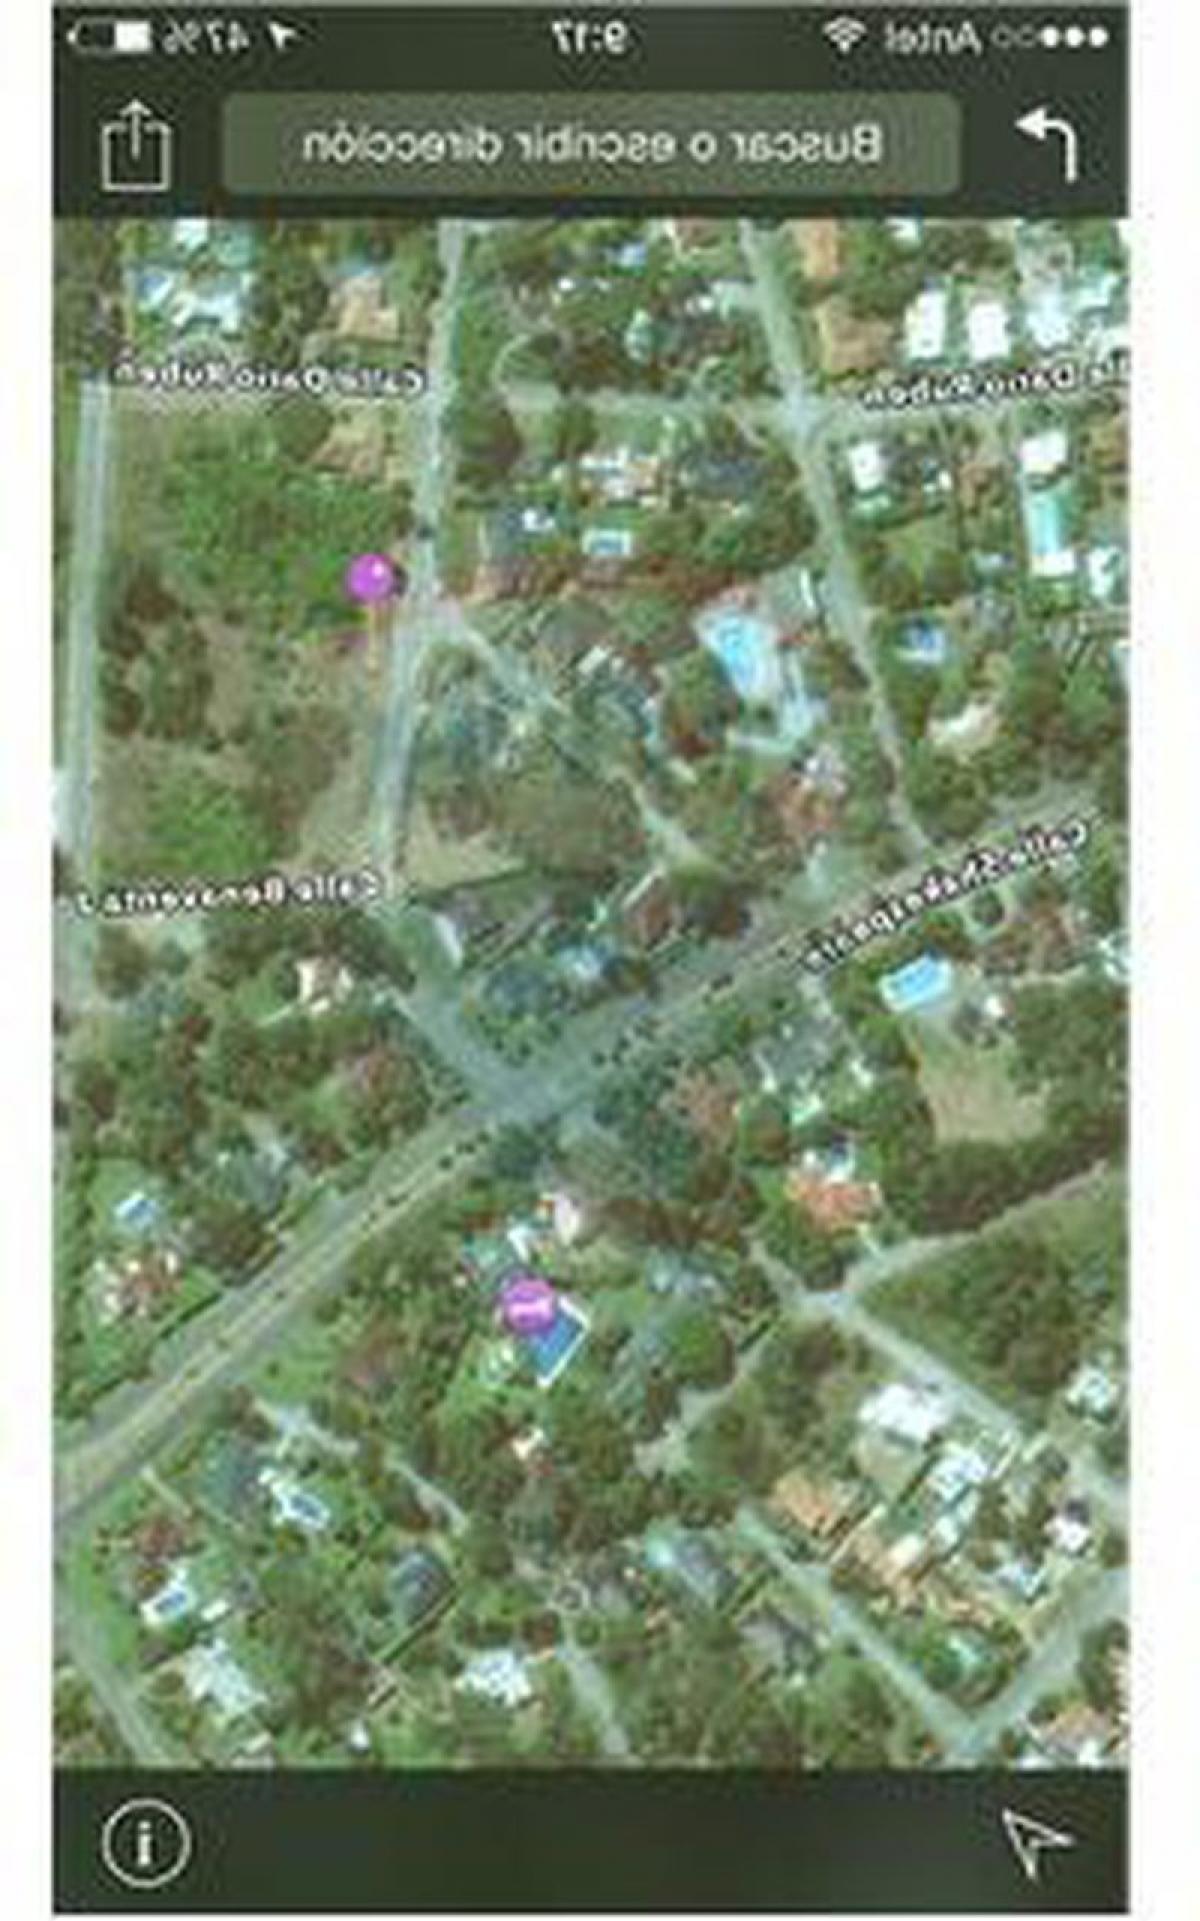 Picture of Residential Land For Sale in Punta Del Este, Maldonado, Uruguay